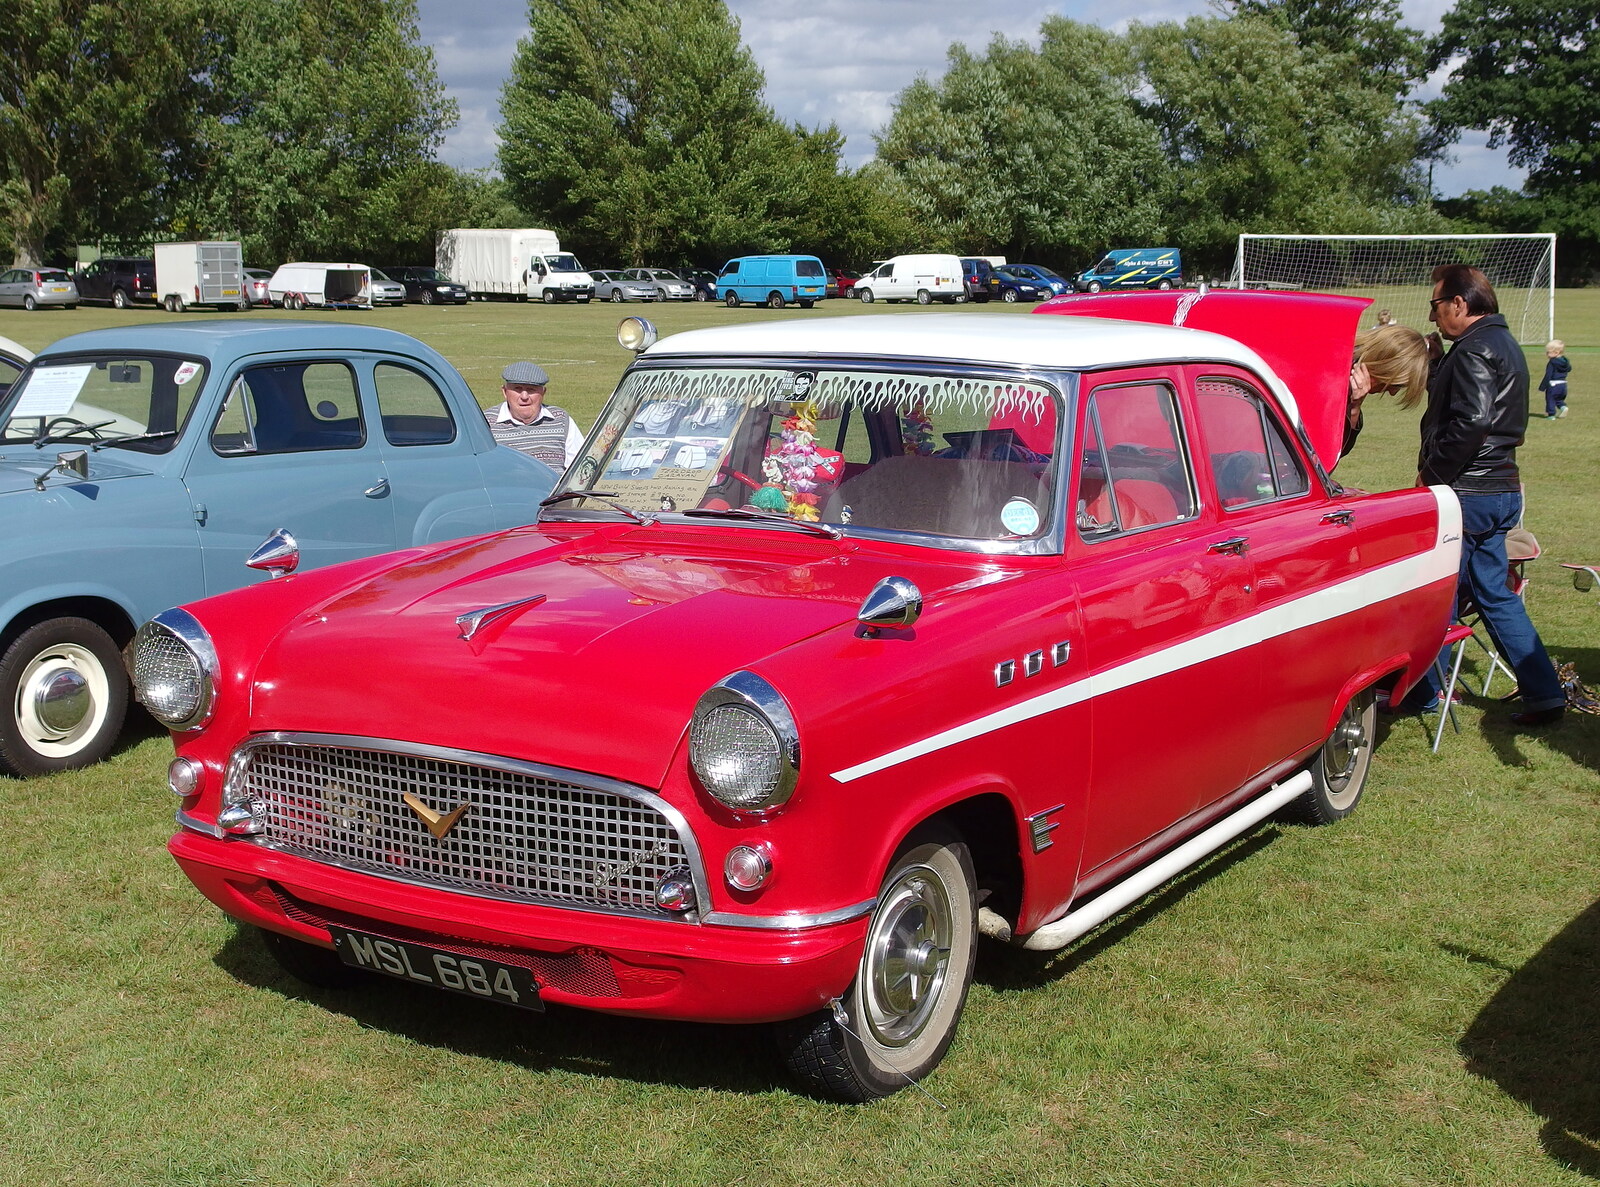 A red Chrysler from Stradbroke Classic Car Show, Stradbroke, Suffolk - 7th September 2013